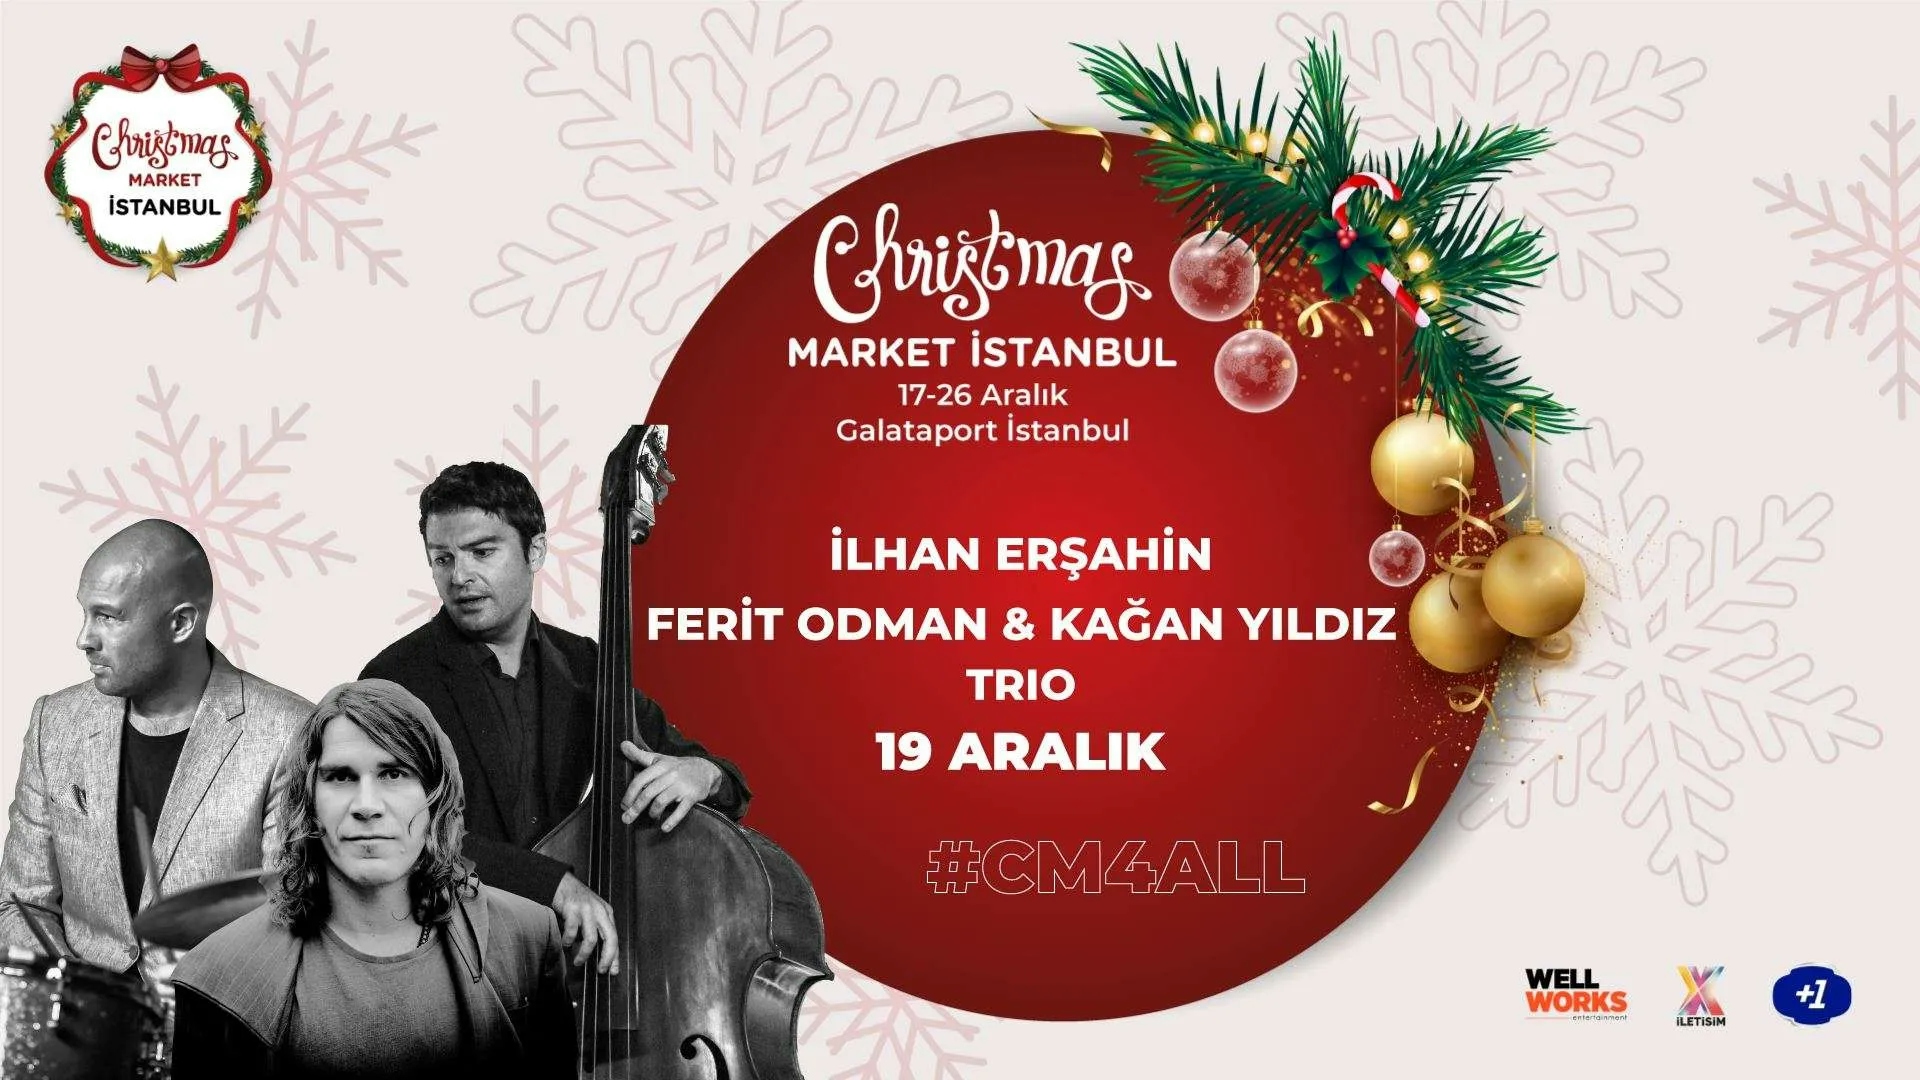 İlhan Erşahin&Ferit Odman&Kağan Yıldız Trio-Christmas Market